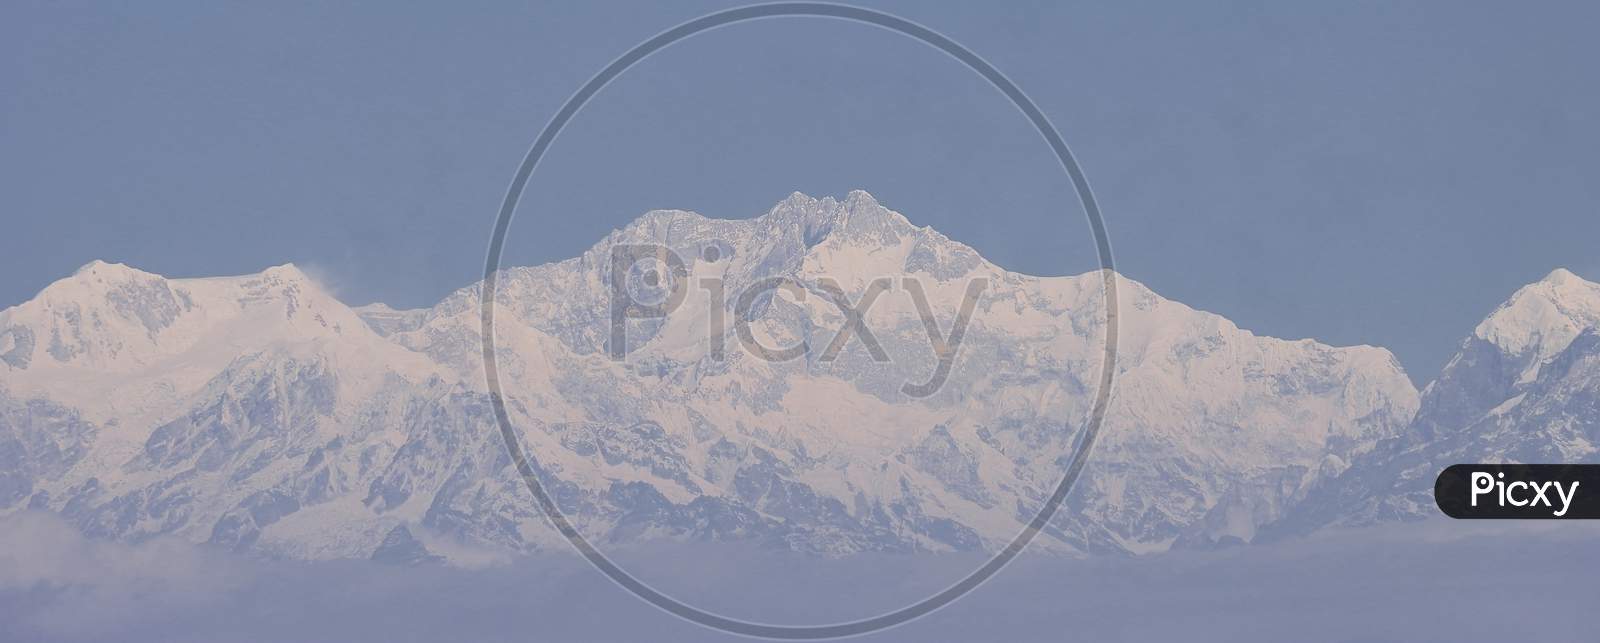 world 3rd highest peak mount kangchenjunga or kanchenjunga and snowcapped himalaya from lepcha jagat near darjeeling, west bengal, india